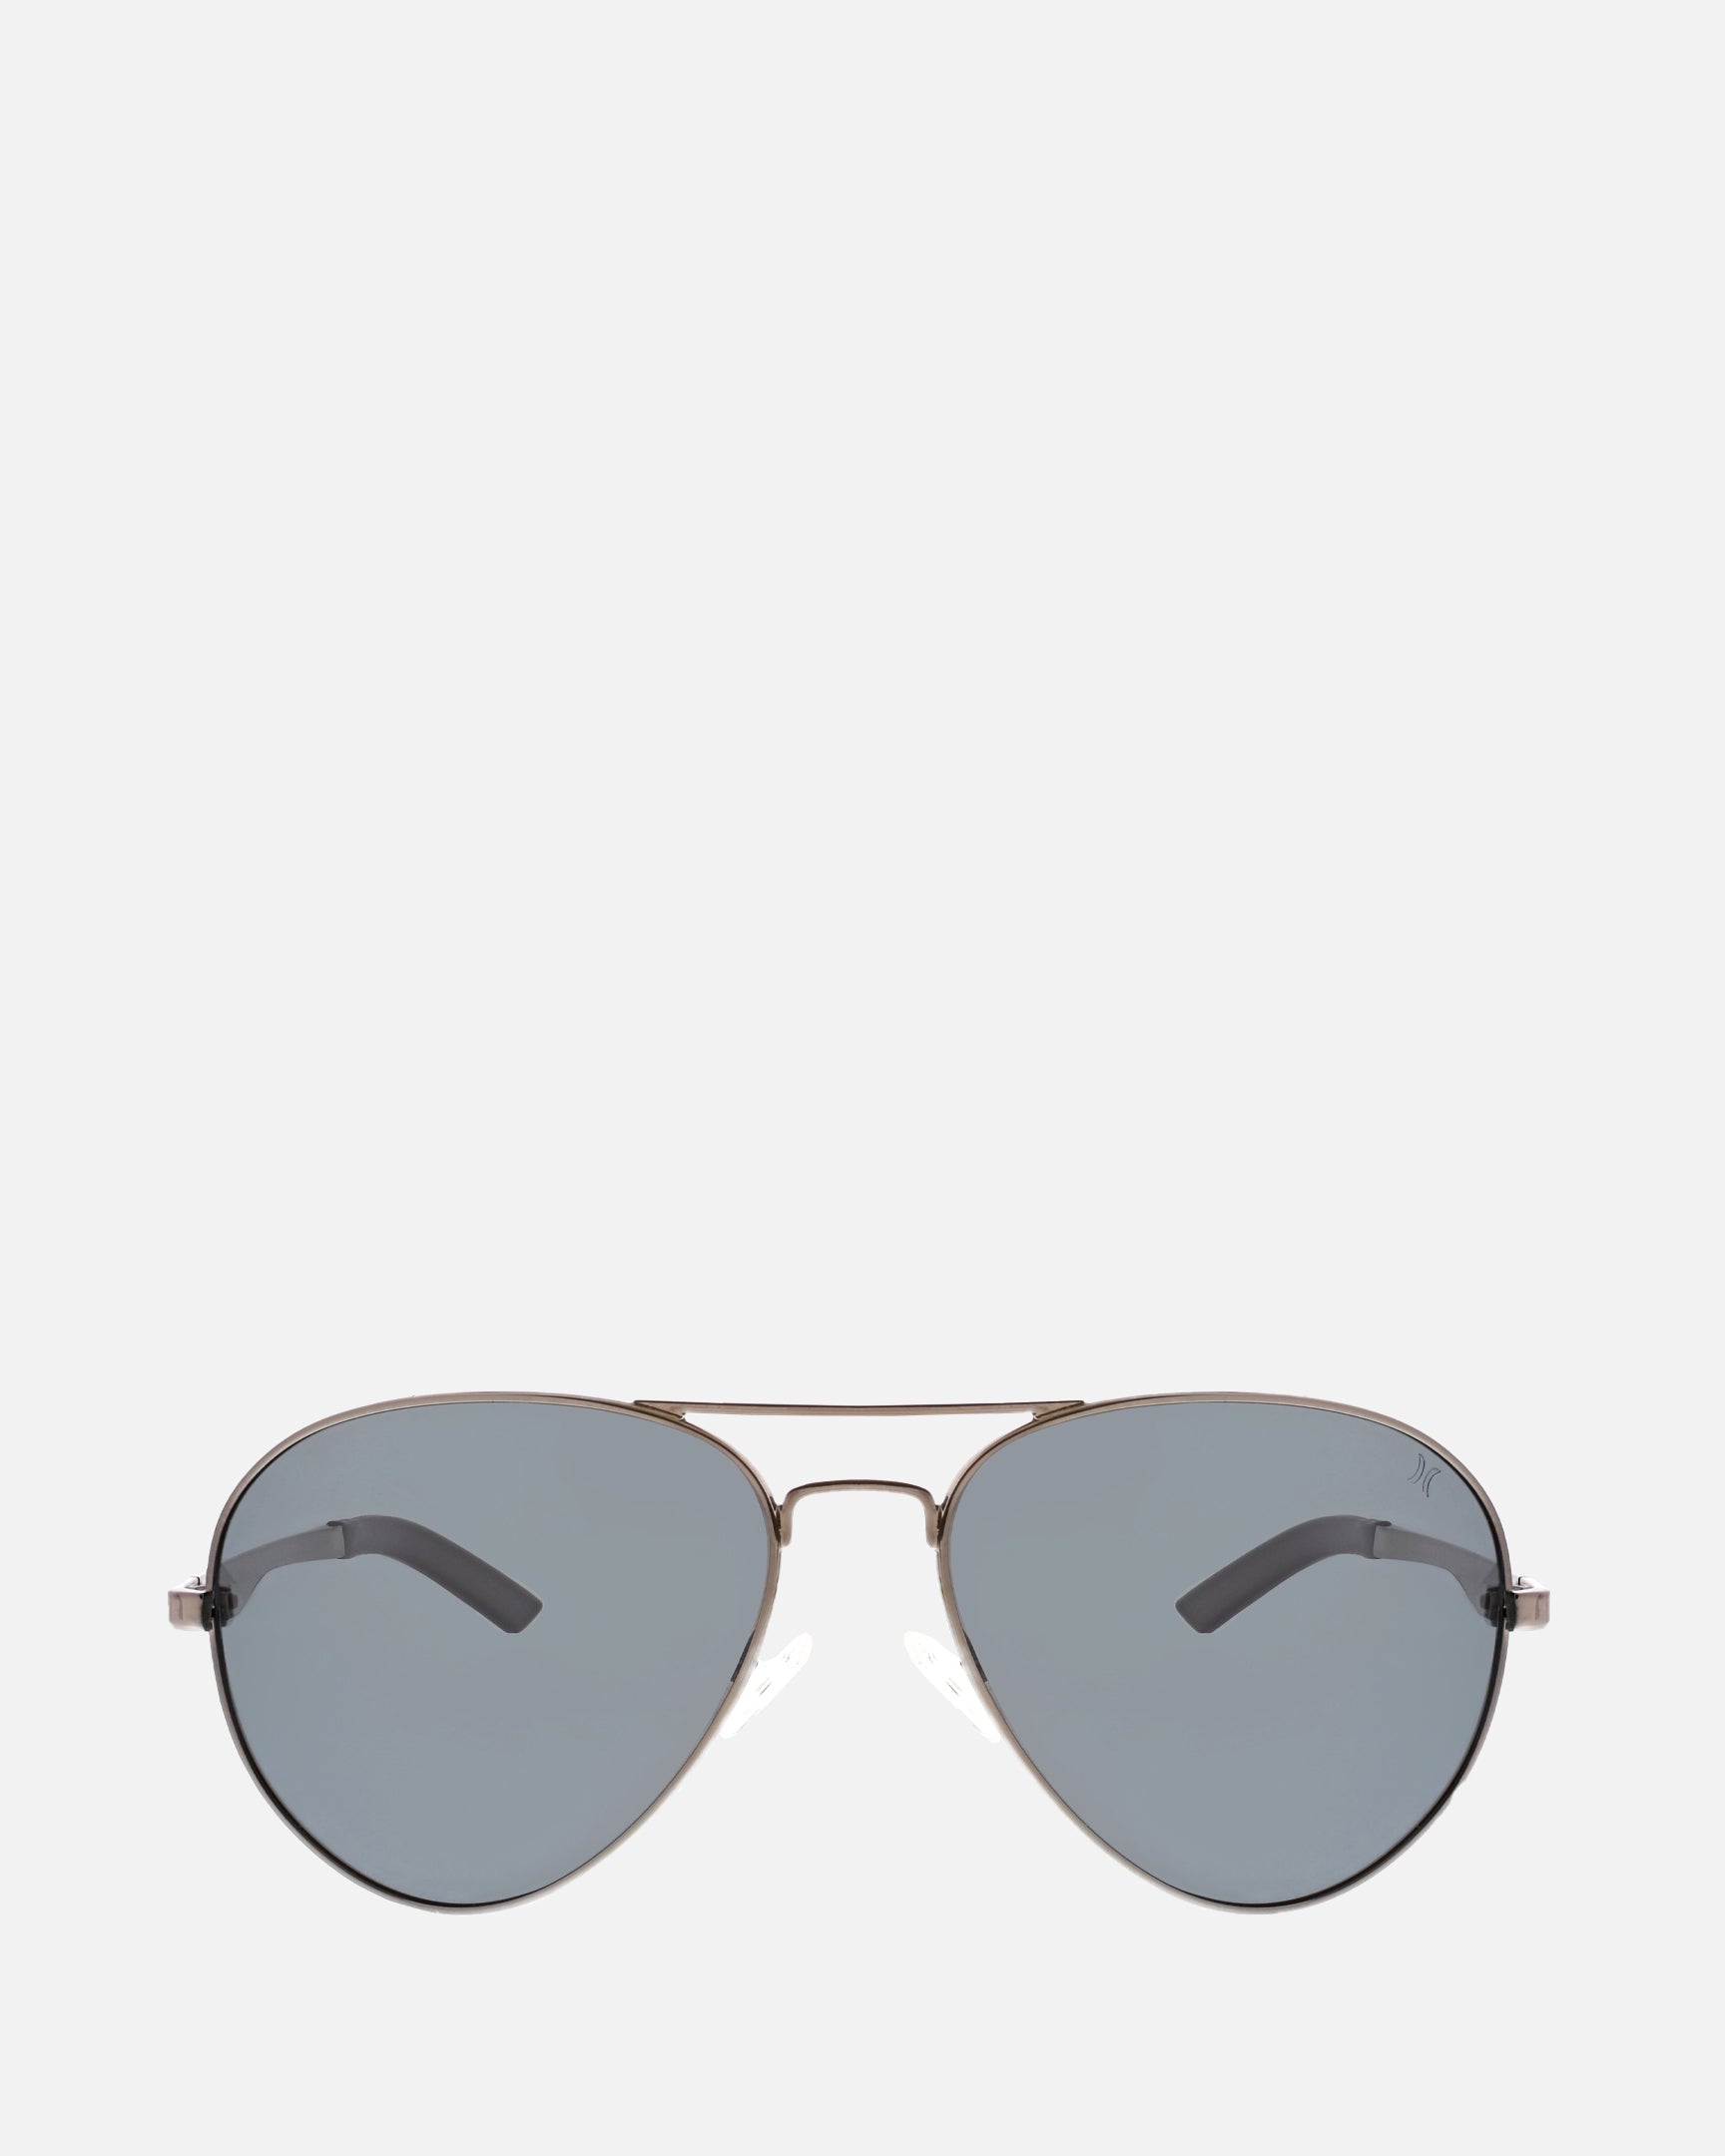 goodr Mach G Polarized Sunglasses | REI Co-op